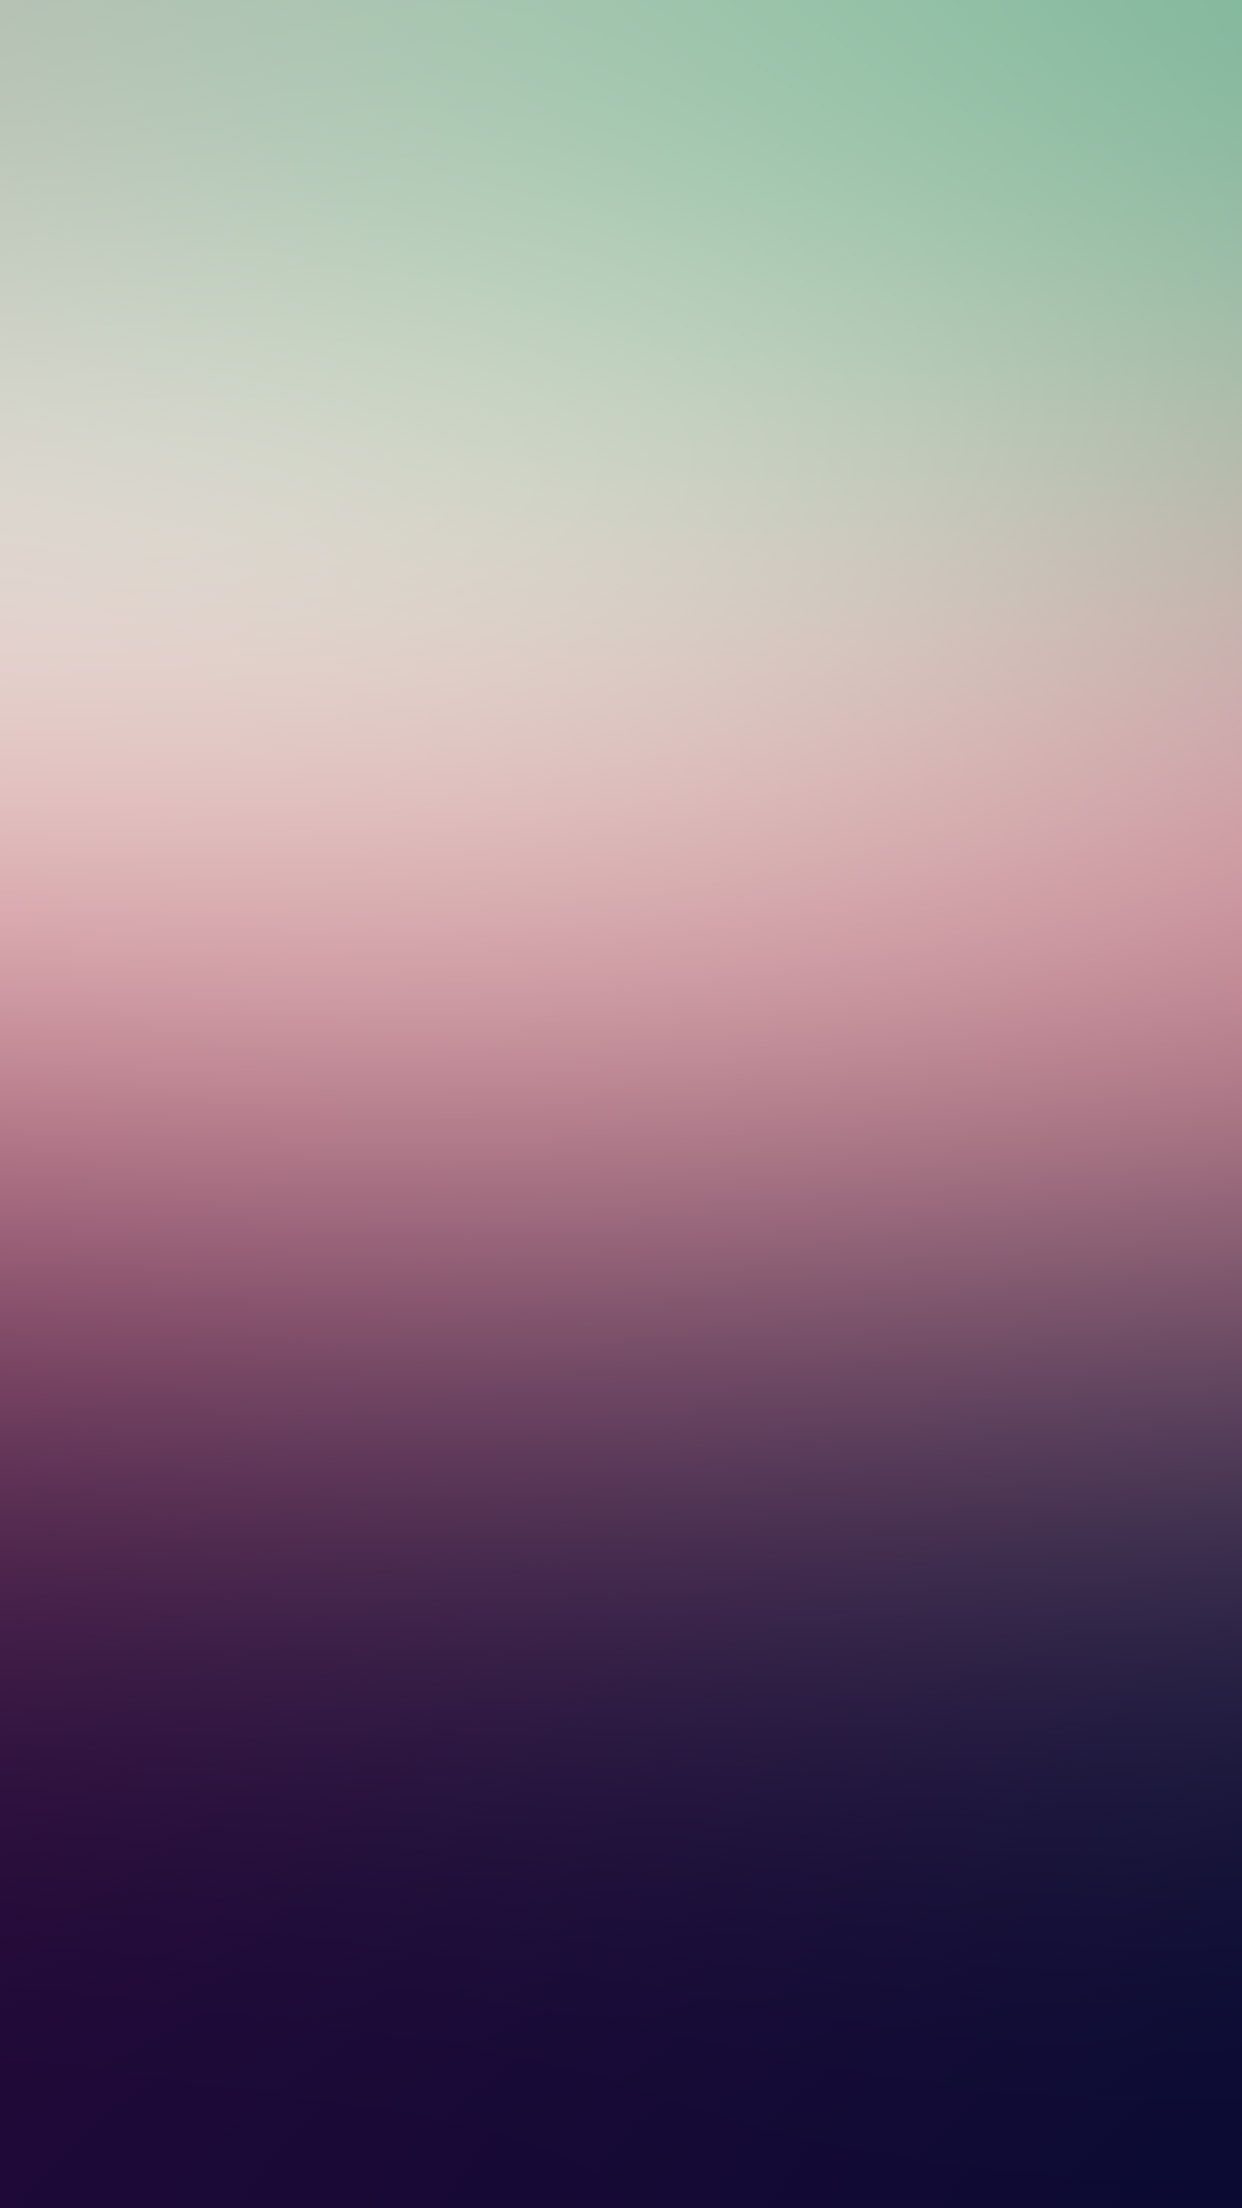 iPhone wallpaper. magic color purple gradation blur